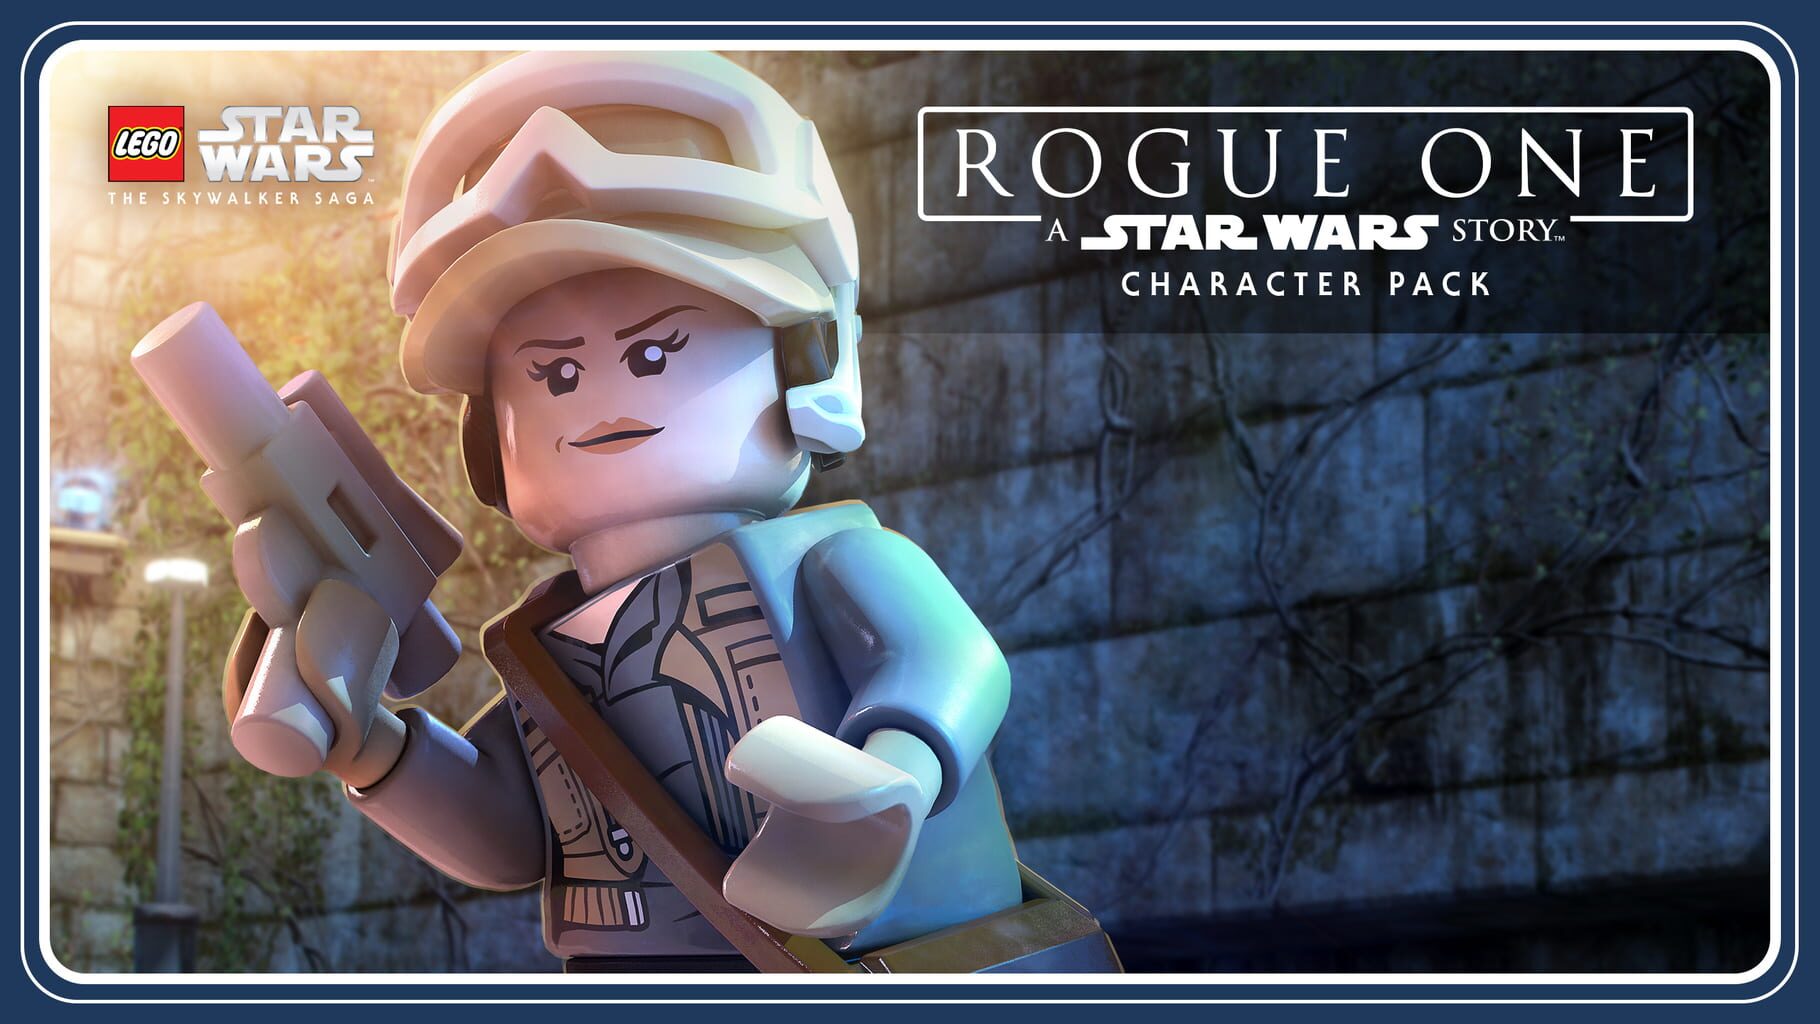 LEGO Star Wars: The Skywalker Saga - Rogue One: A Star Wars Story Character Pack artwork